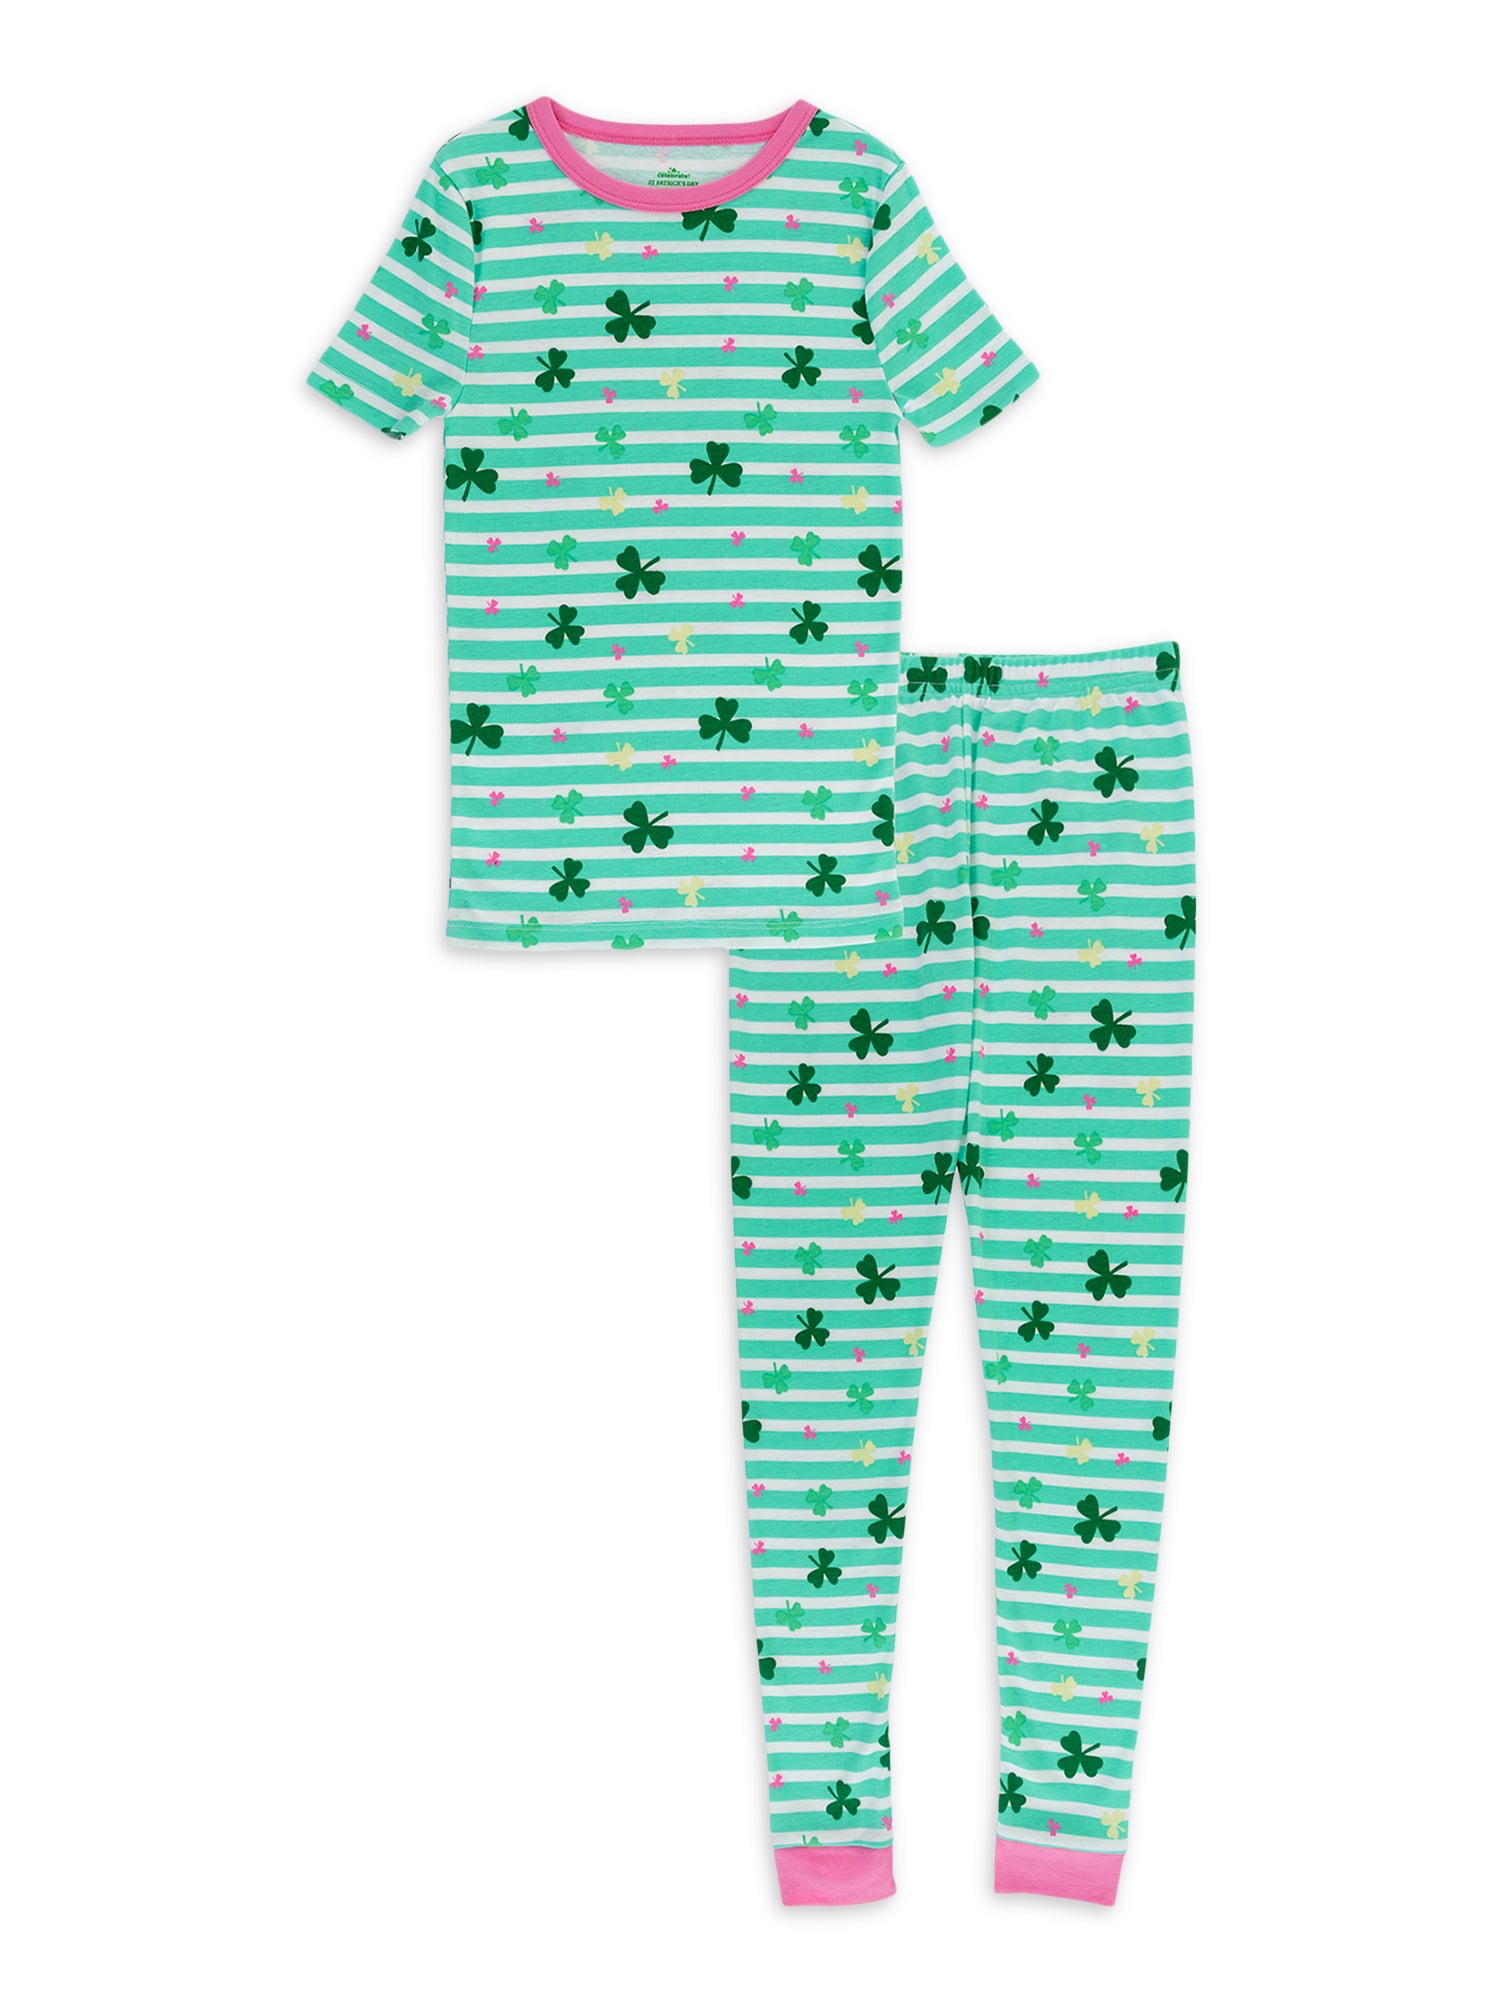 Custom Boy & Girl Kids Pajamas Pjs Love Clover St Patricks Day Cotton